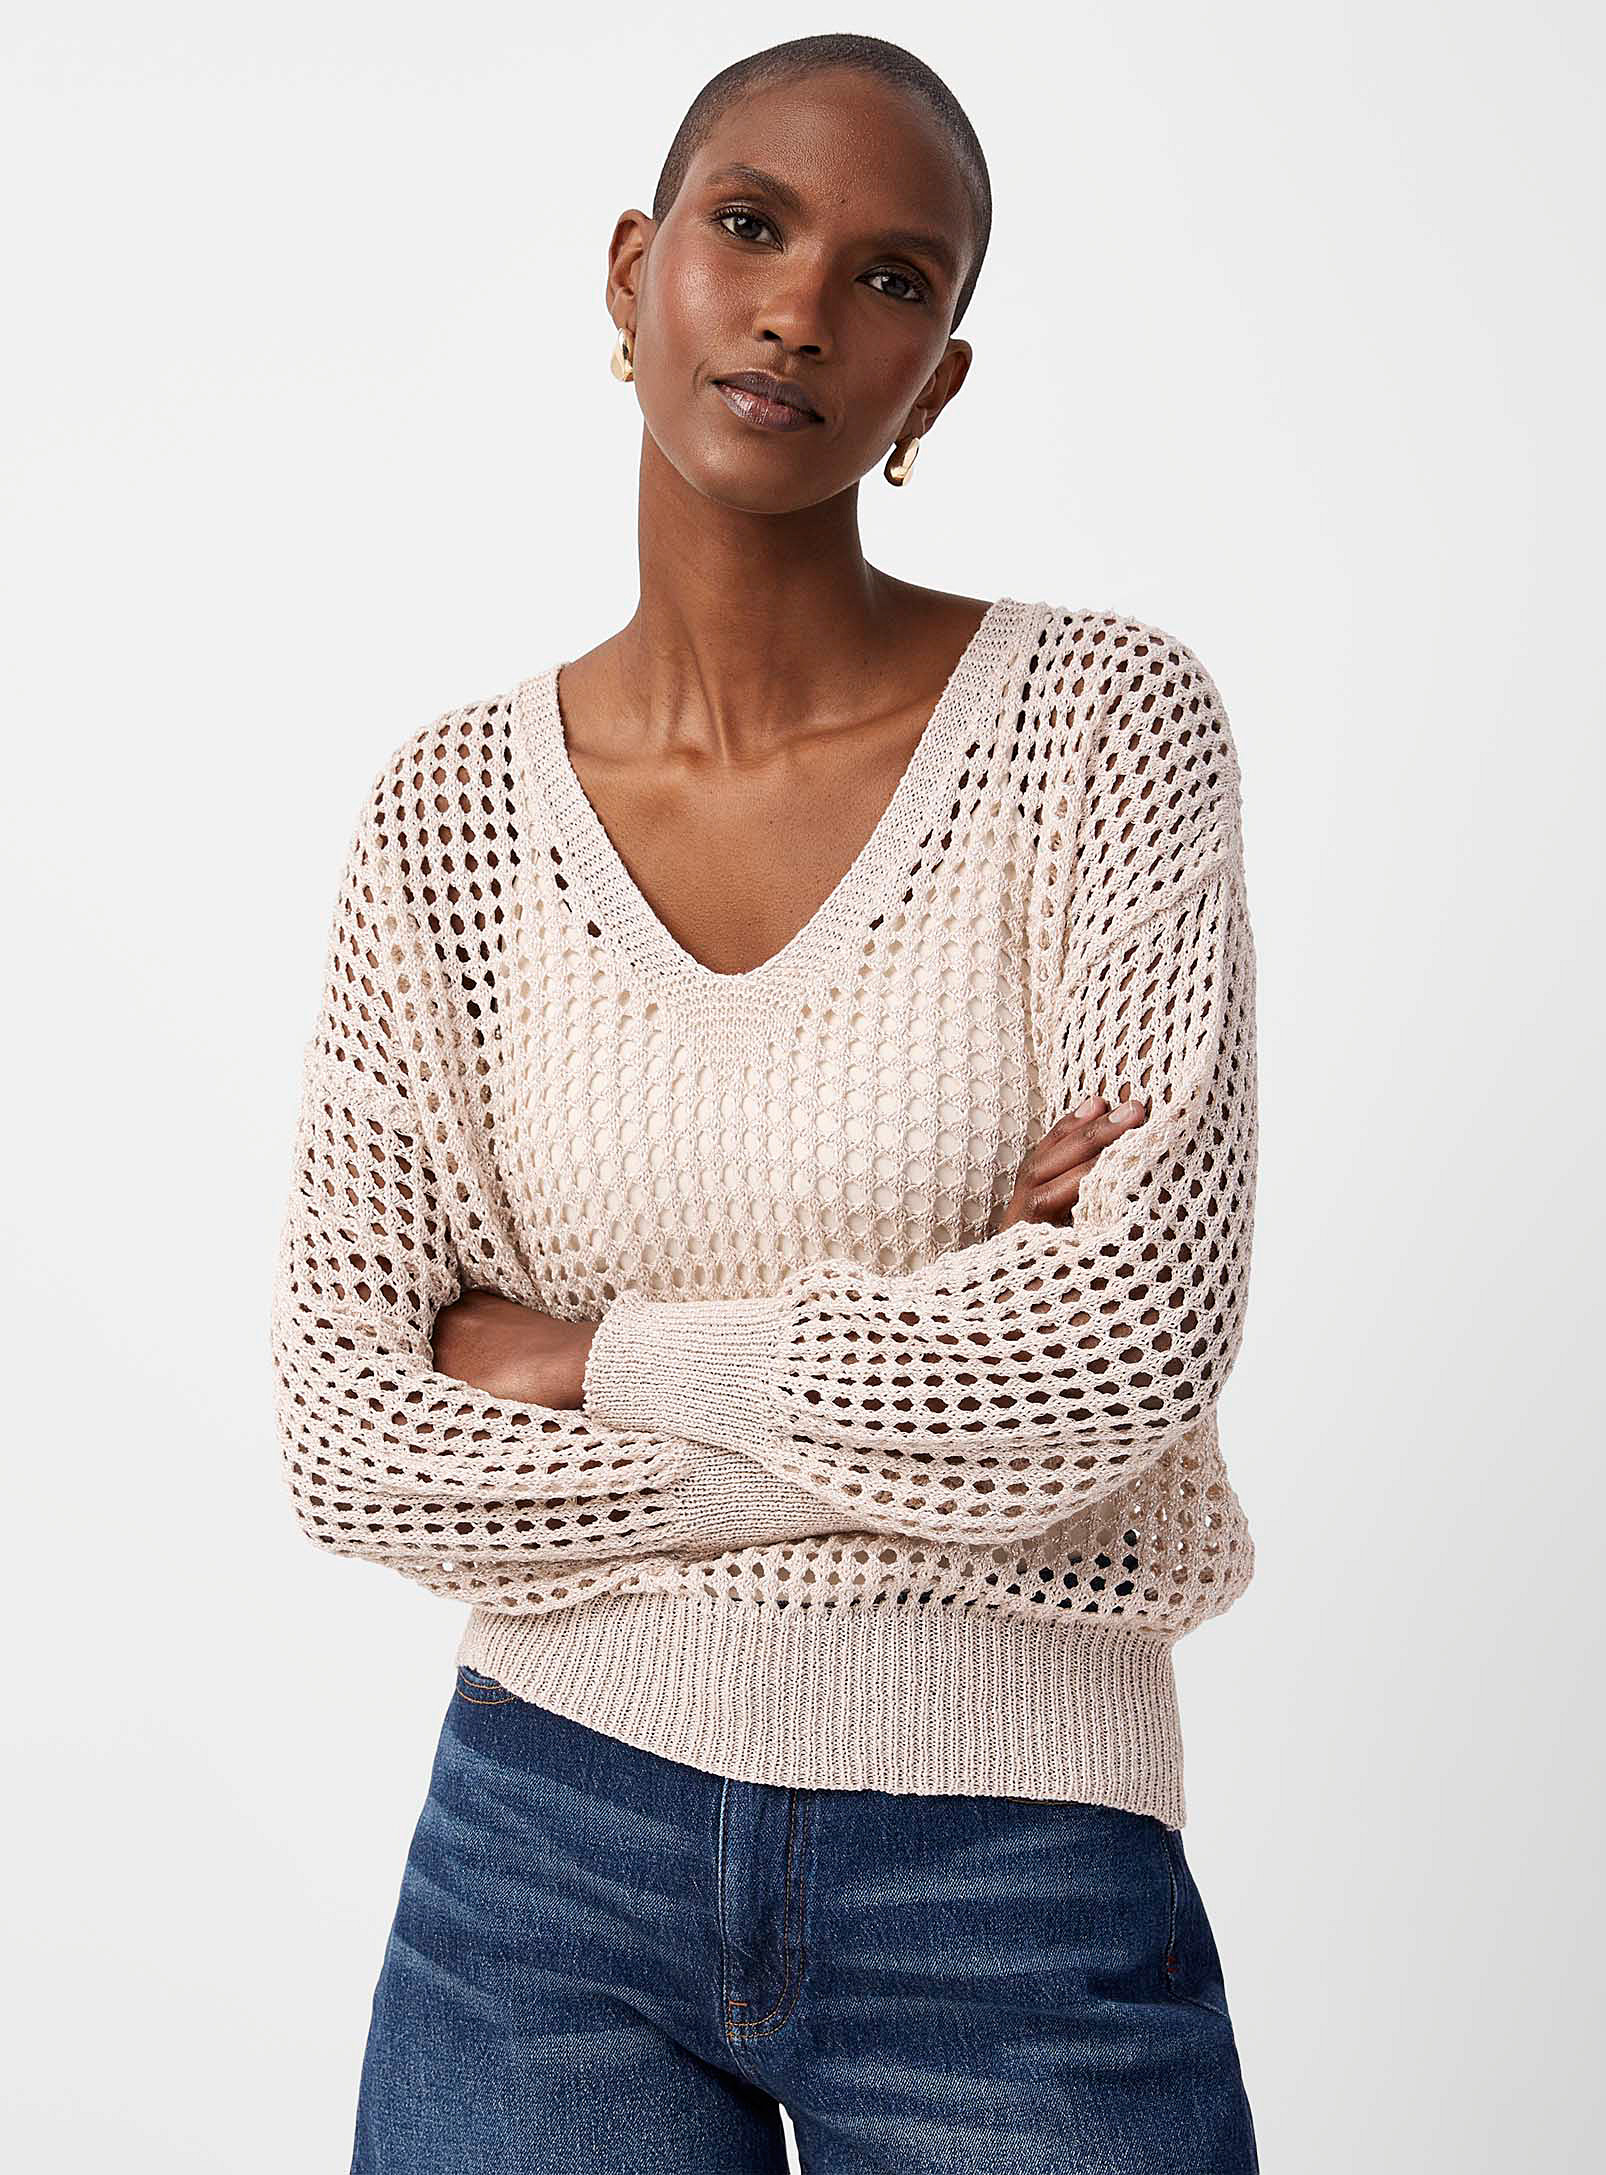 Contemporaine - Women's Openwork crochet glittering sweater